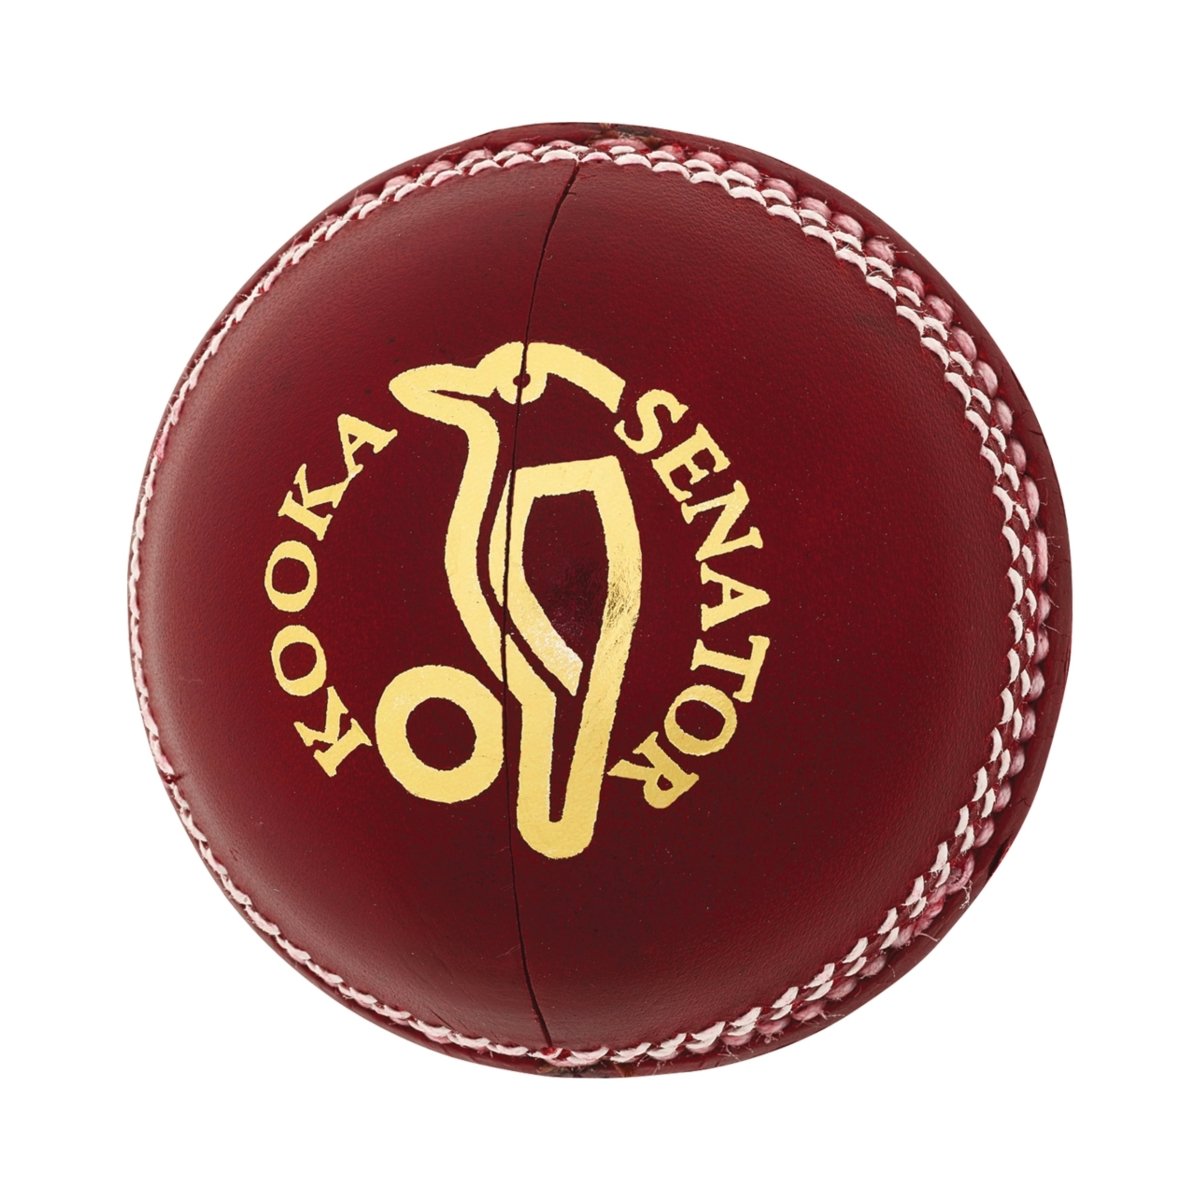 Kookaburra Senator Cricket Ball Pack of 12.